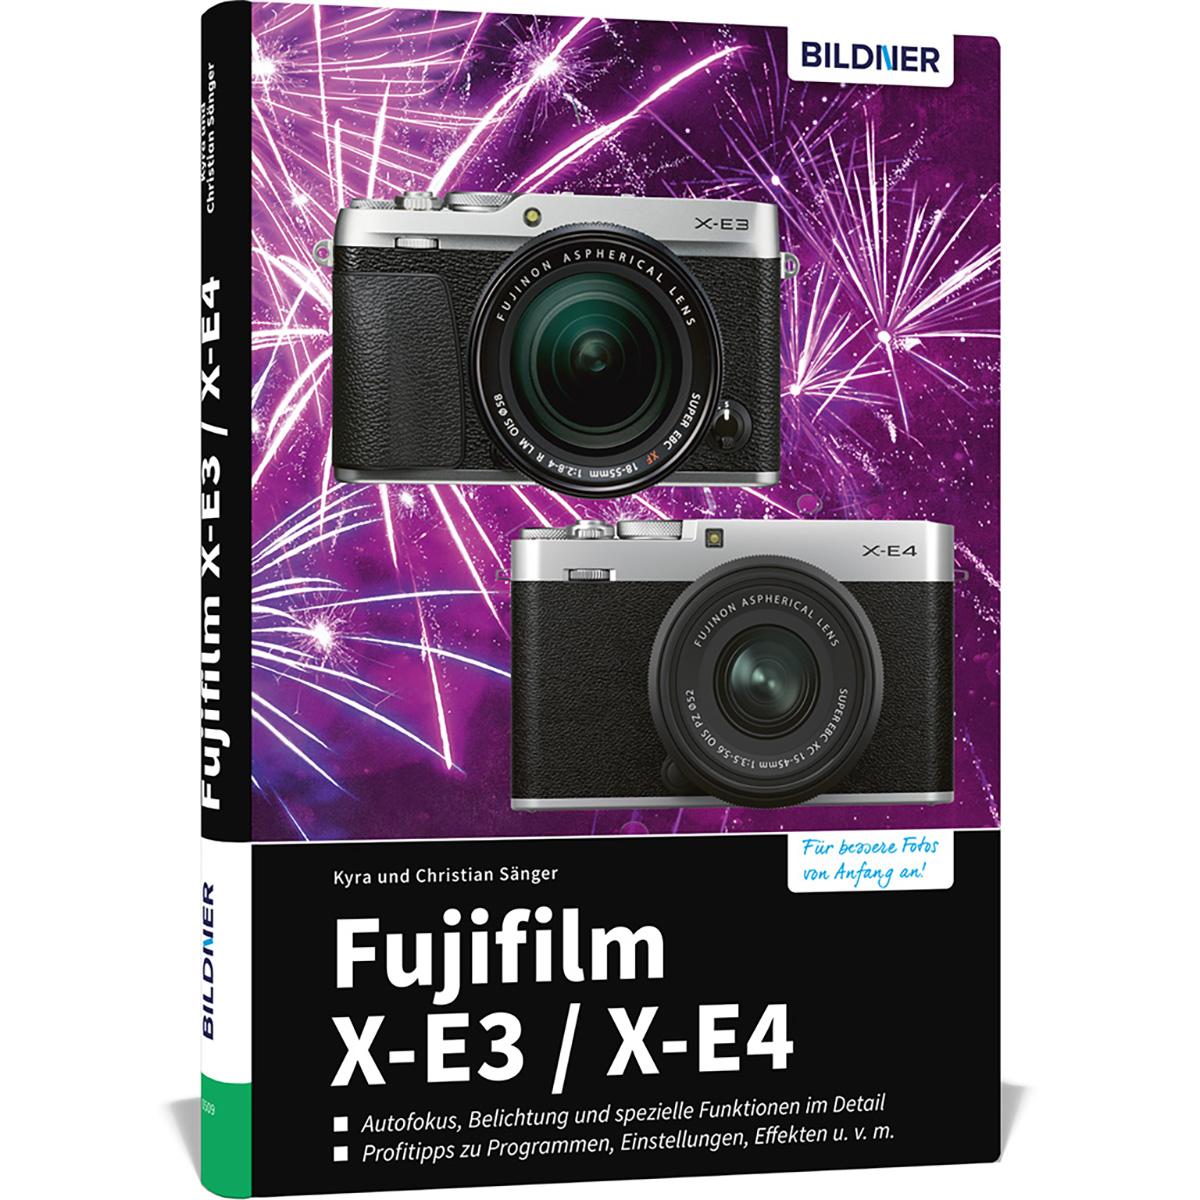 Praxisbuch zu X-E4 Das Fujifilm Kamera! X-E3 - Ihrer / umfangreiche